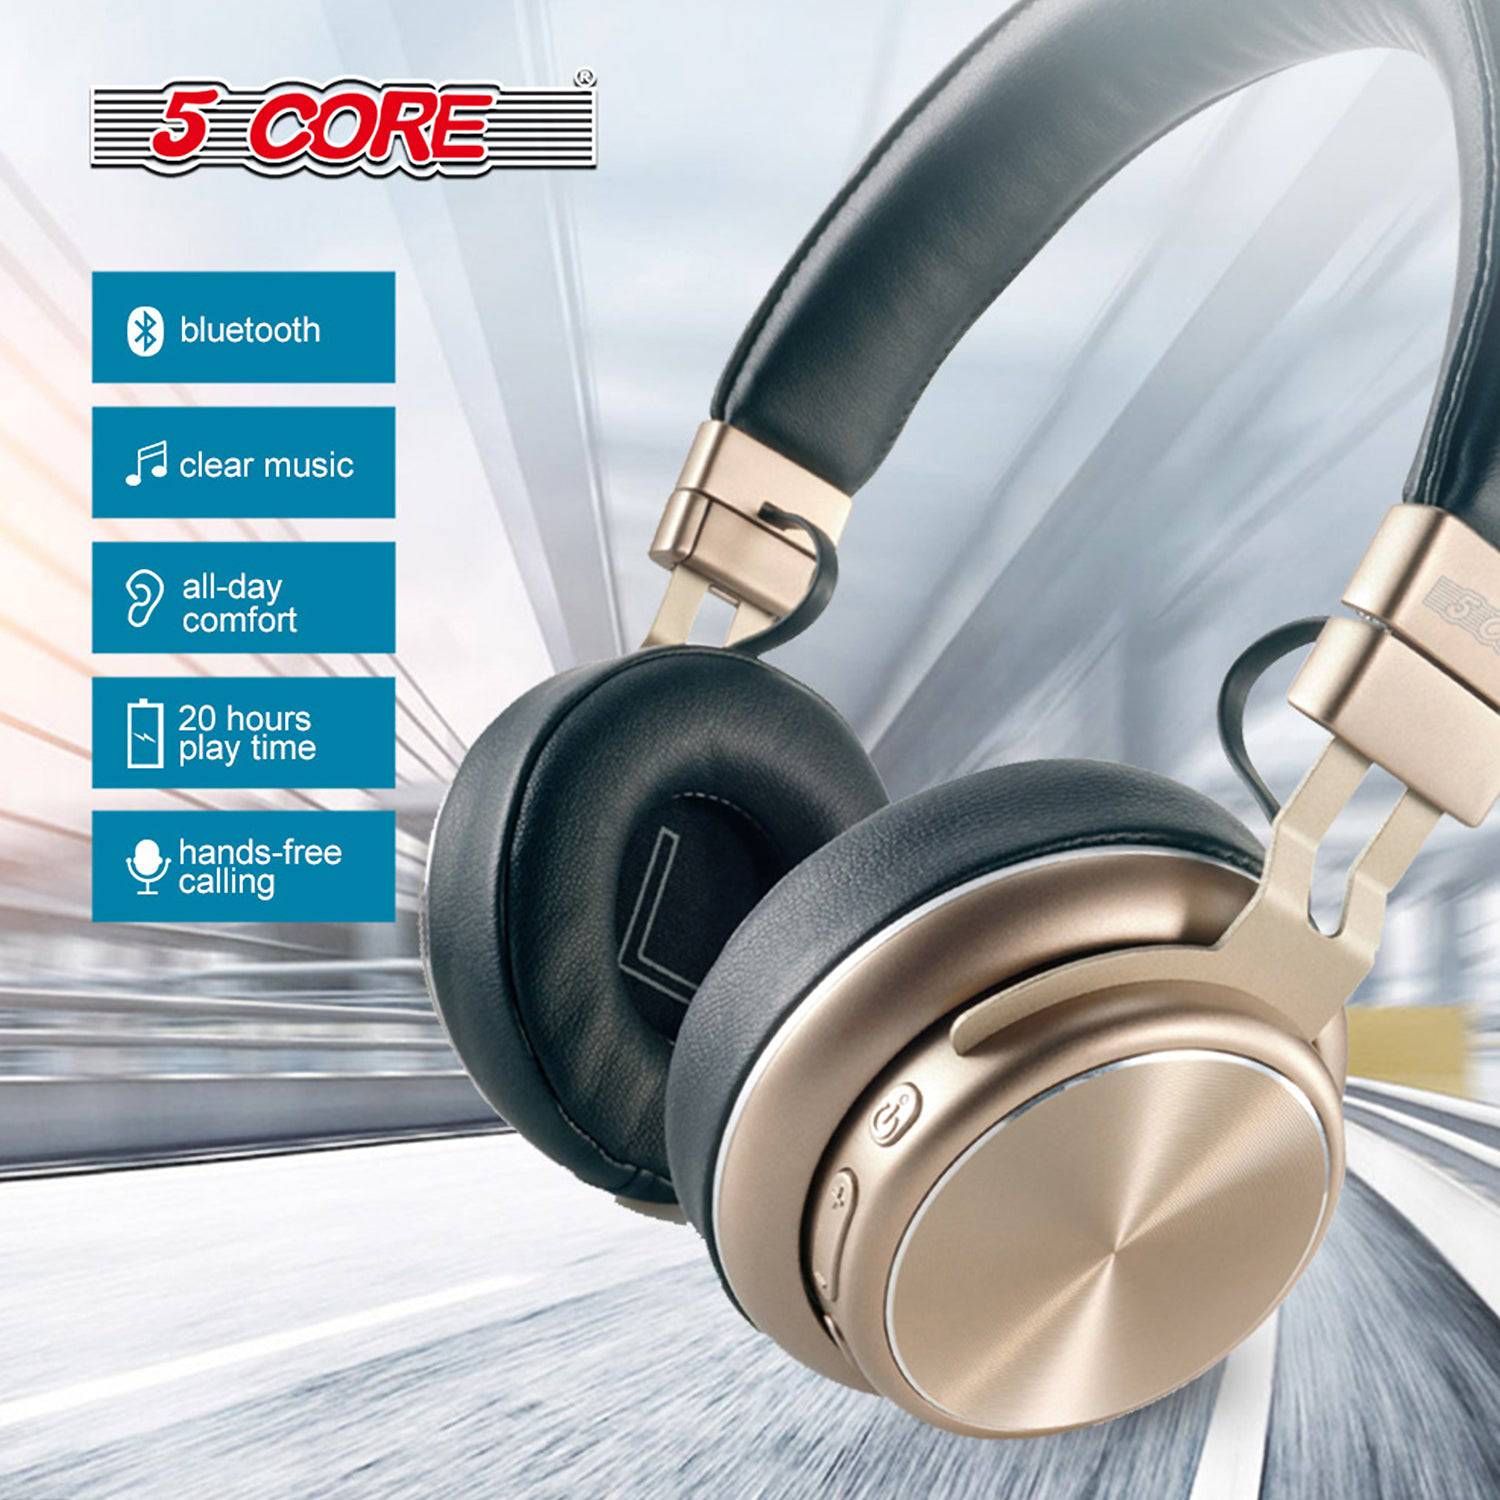 5Core 5Core Premium Headphone Headset 5.0 Wireless Bluetooth Gold Mic G 13 HEADPHONE Ear inbuilt Over